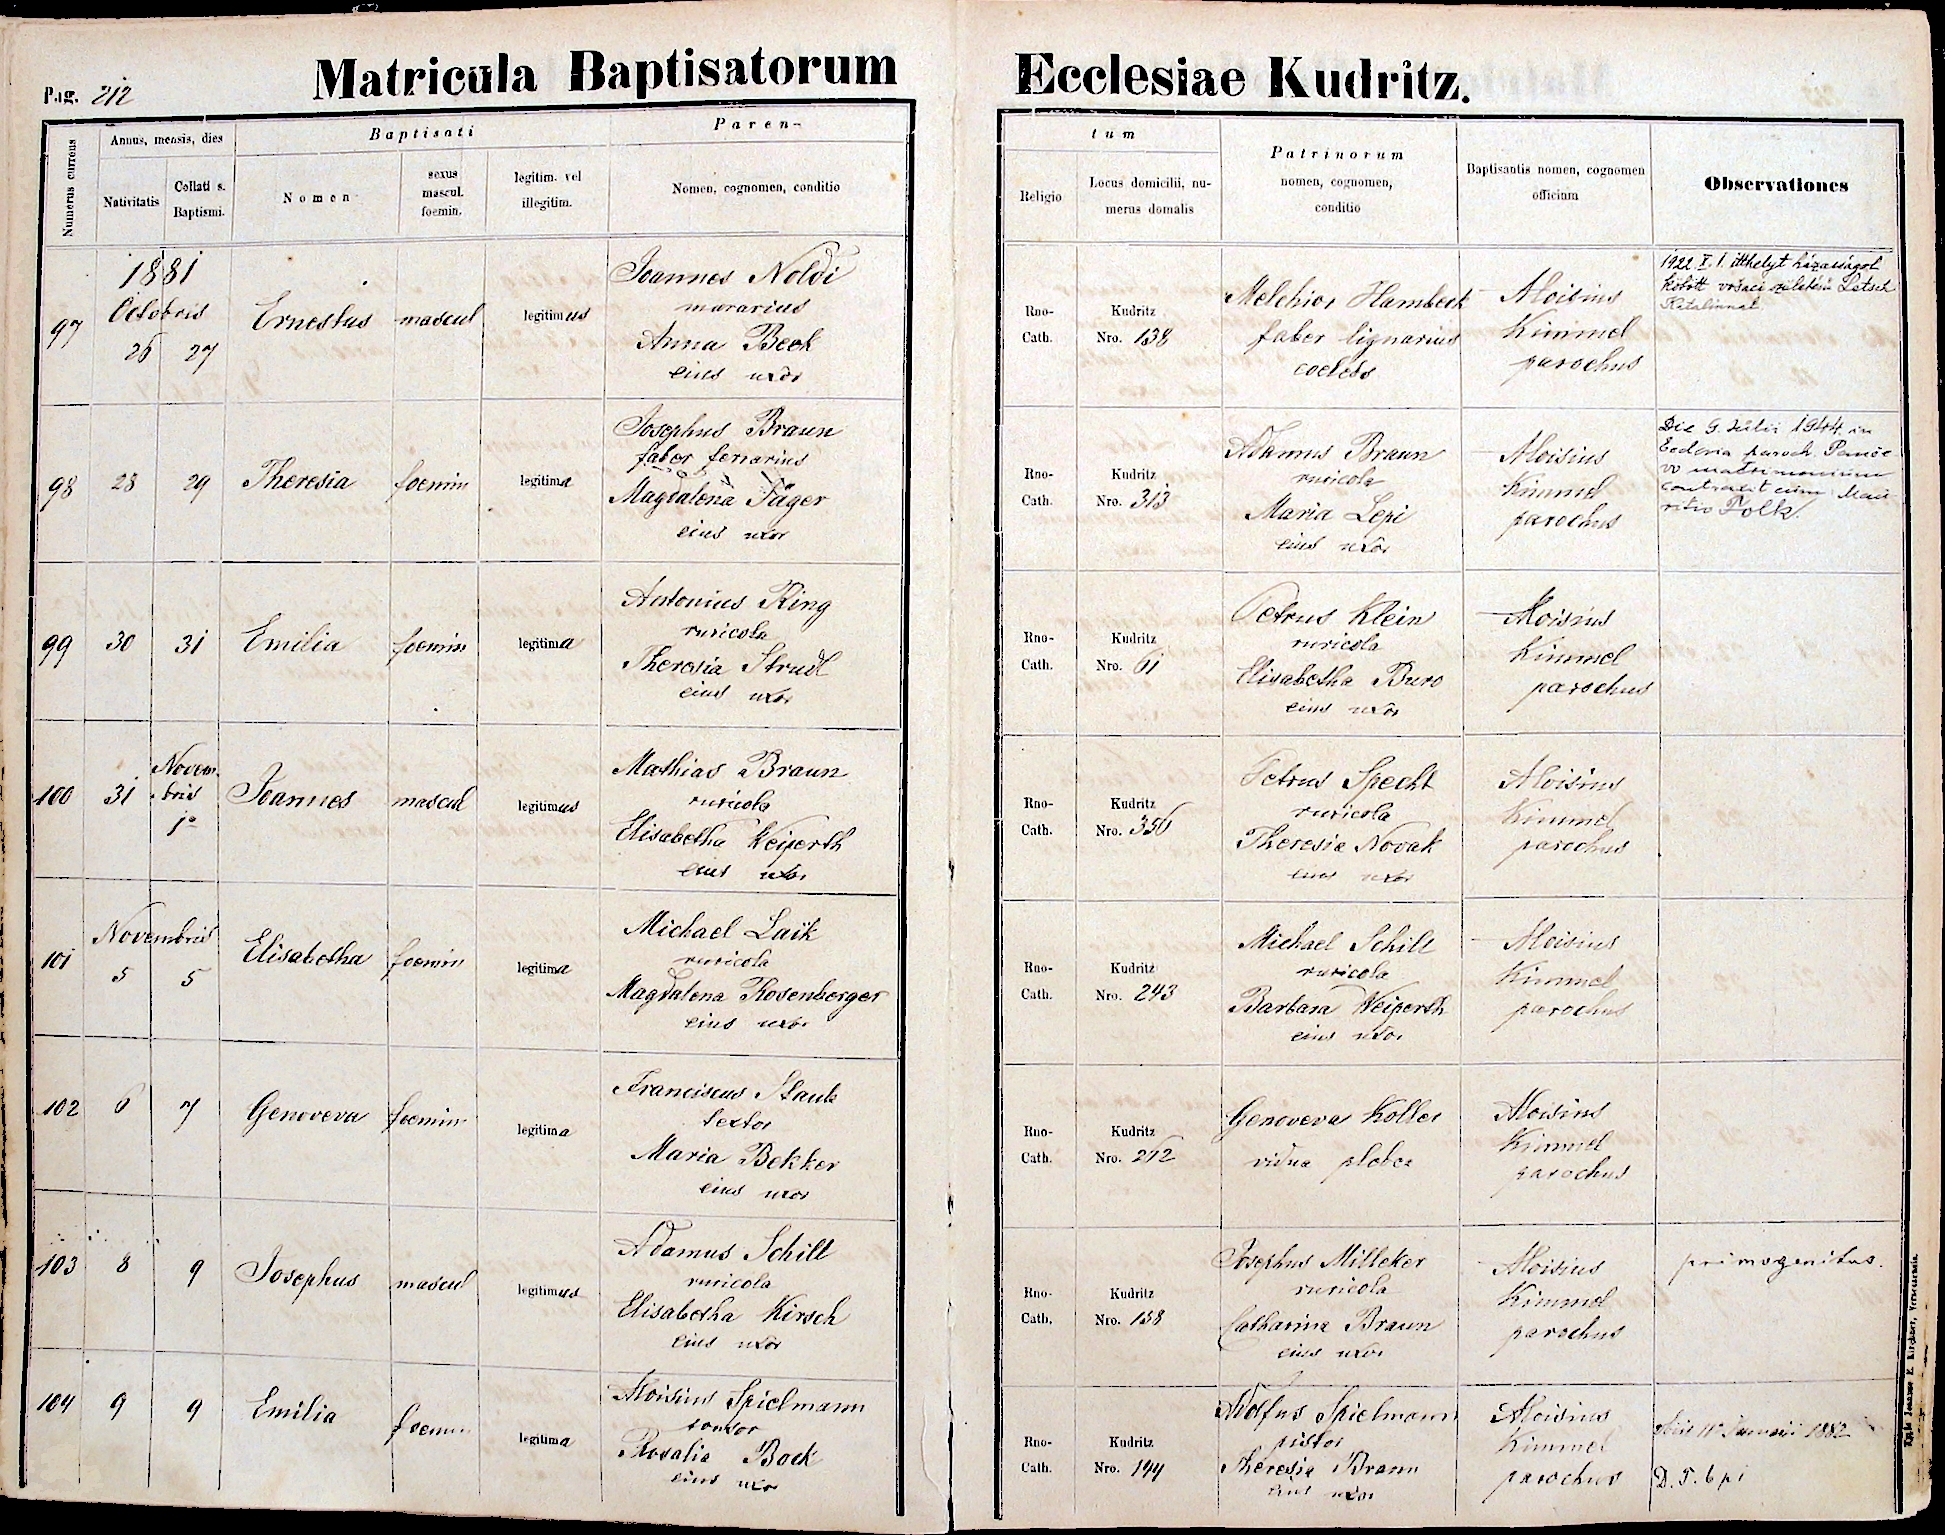 images/church_records/BIRTHS/1884-1899B/1898/212